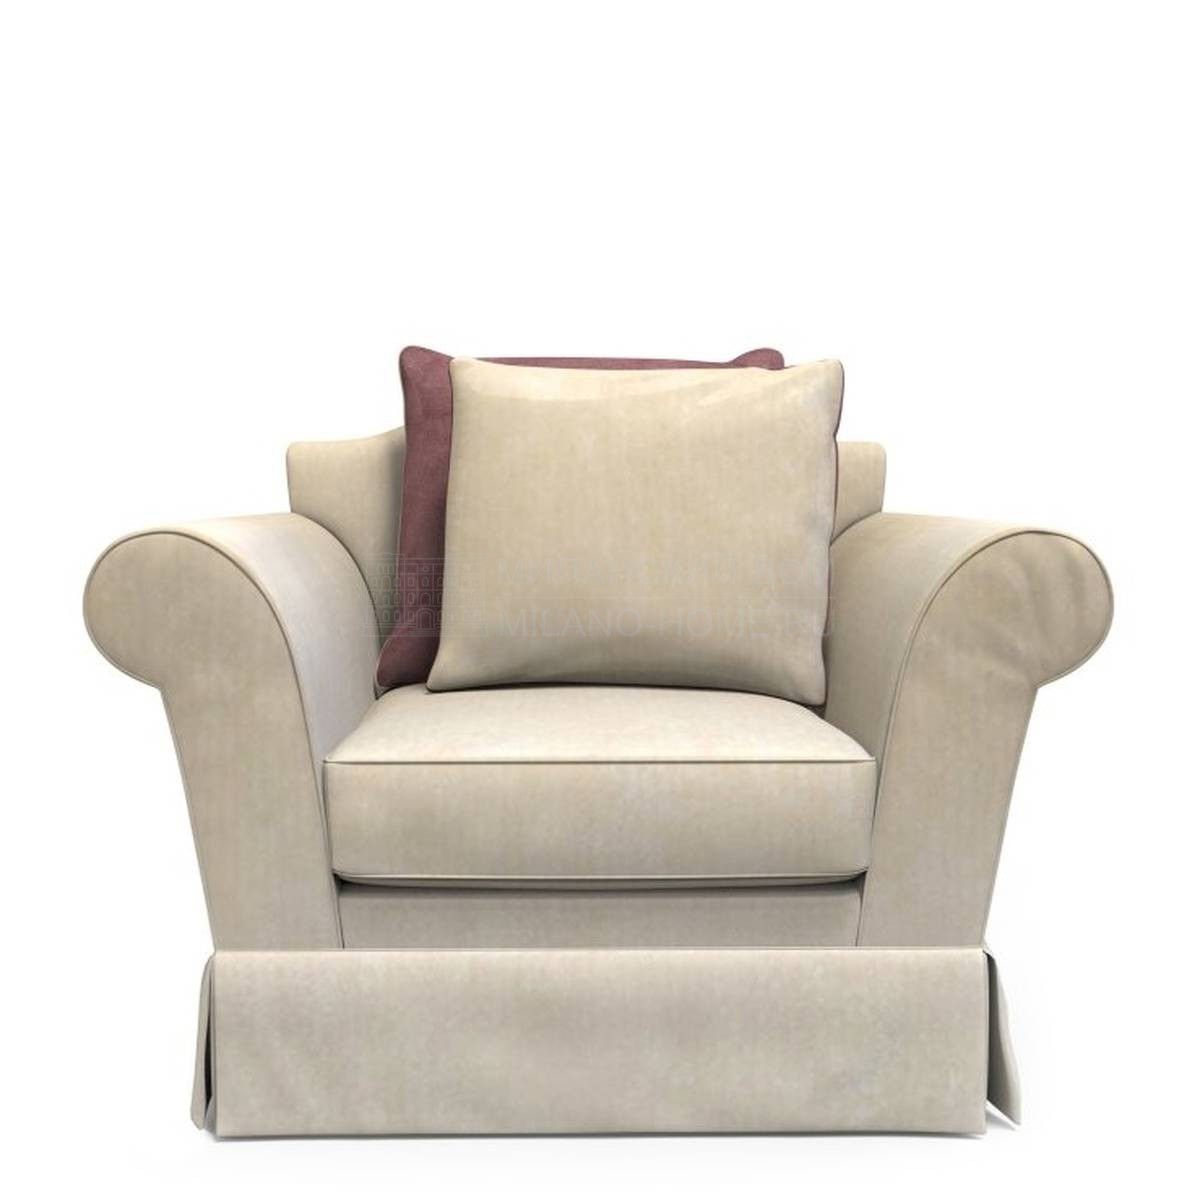 Кресло Saffron armchair из Италии фабрики MARIONI